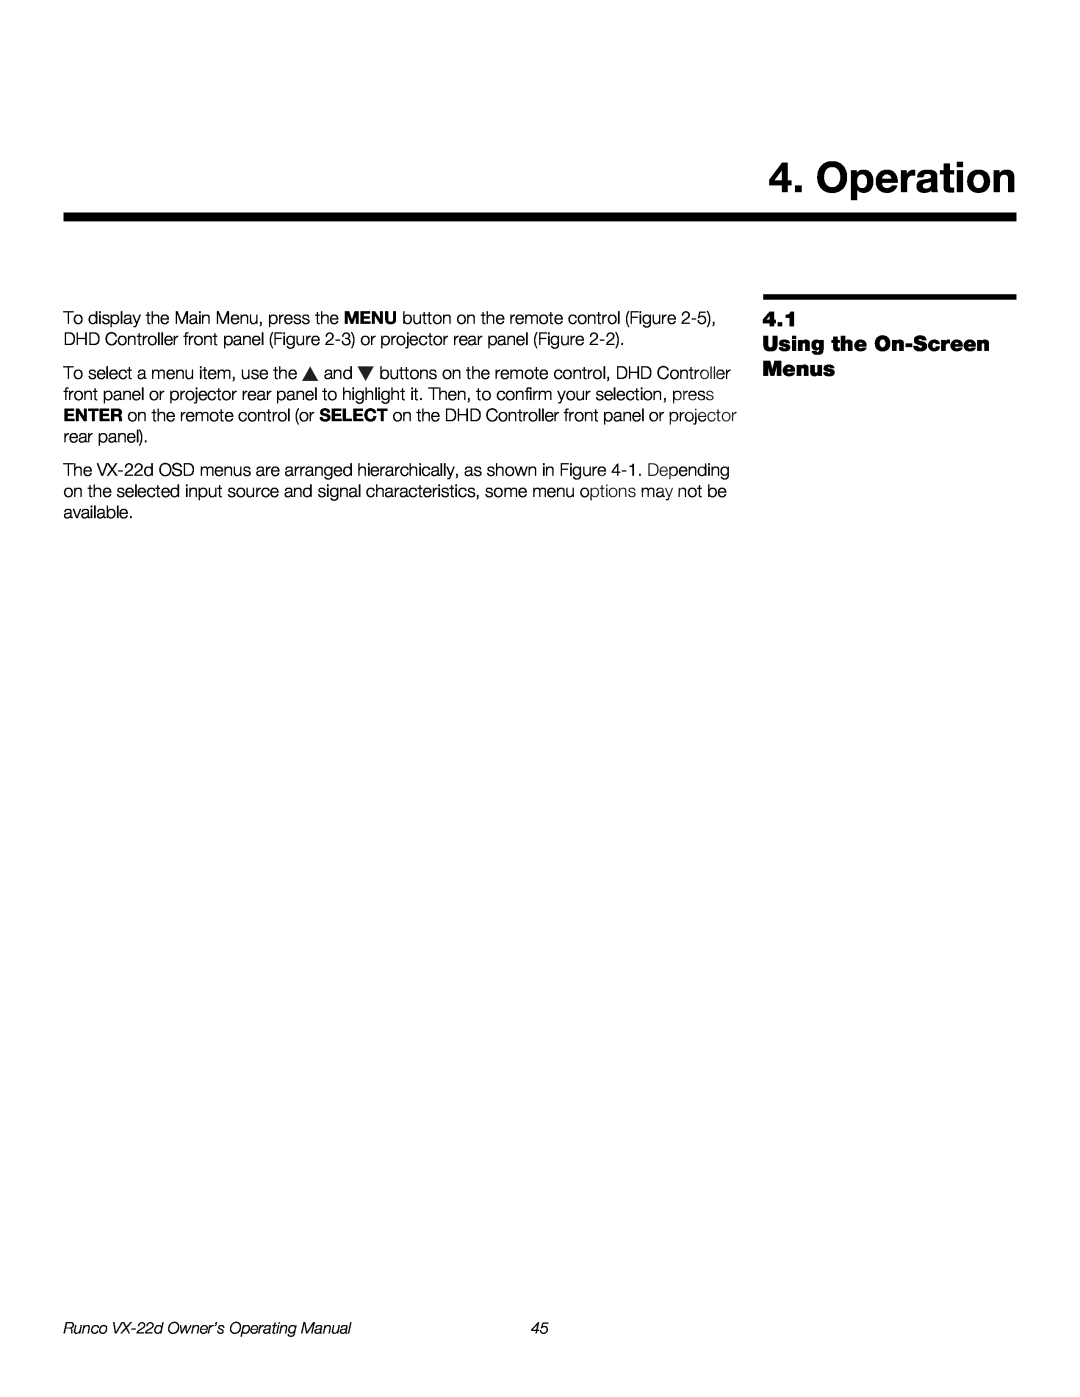 Runco VX-22D manual Operation, Using the On-Screen Menus 